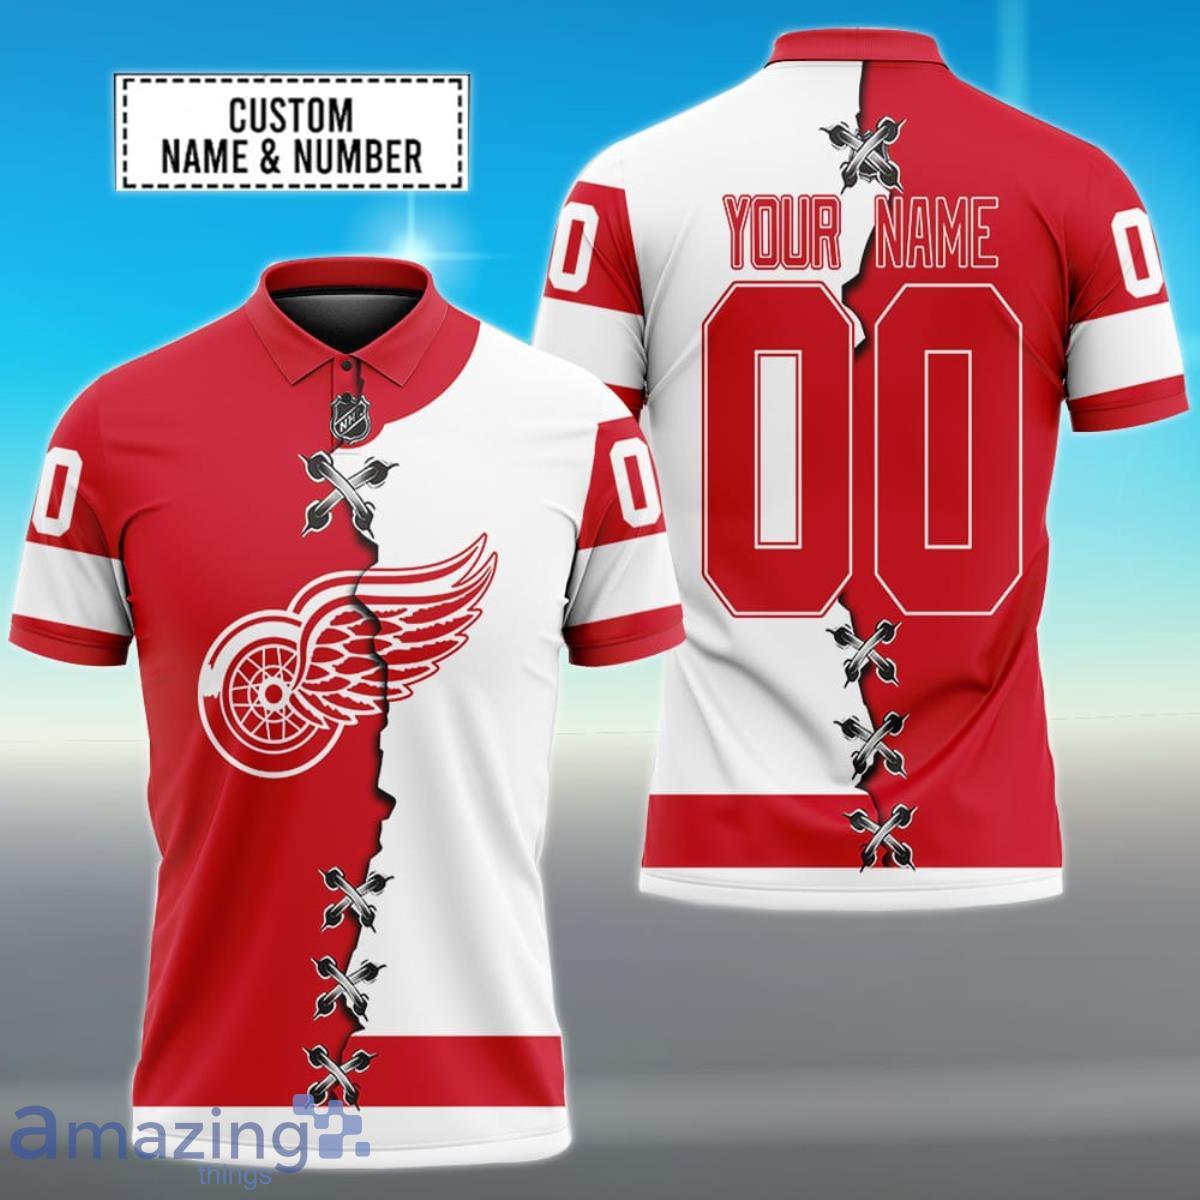 Custom Detroit Red Wings Hockey Jersey: Show Off Your Fandom in